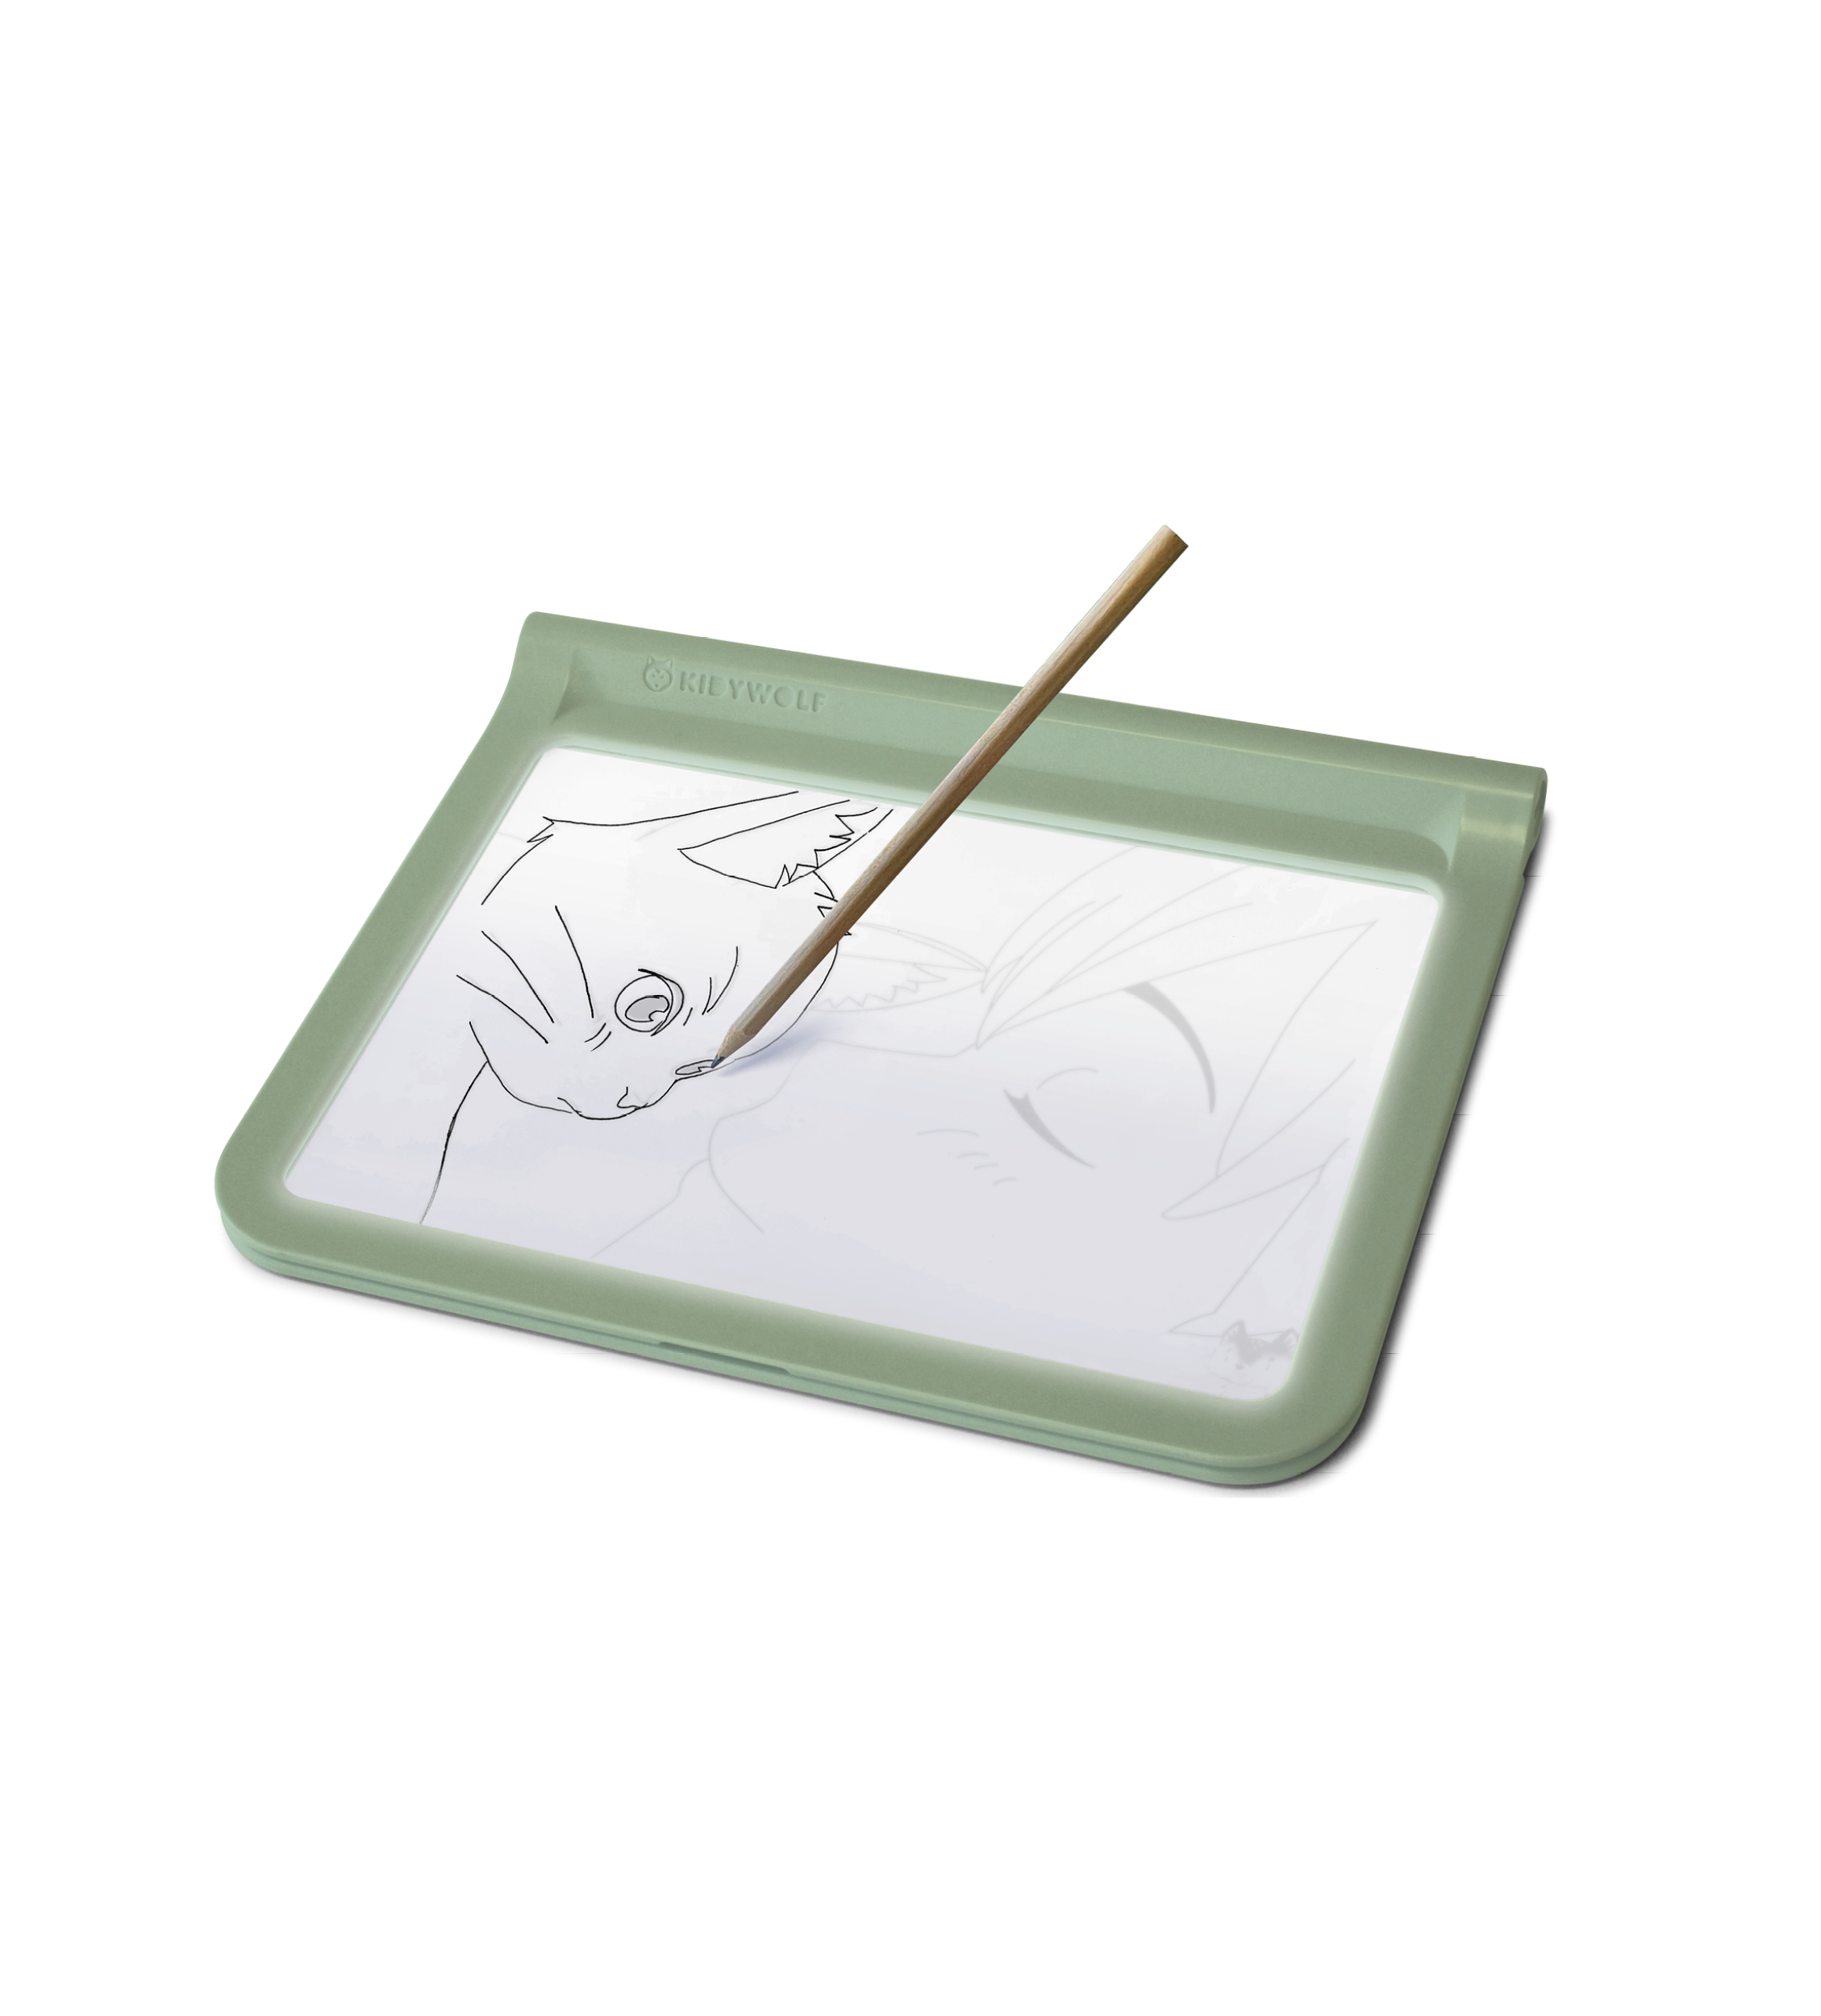 Tablette à dessin - Lumineuse - Enfant - Apprendre à dessiner